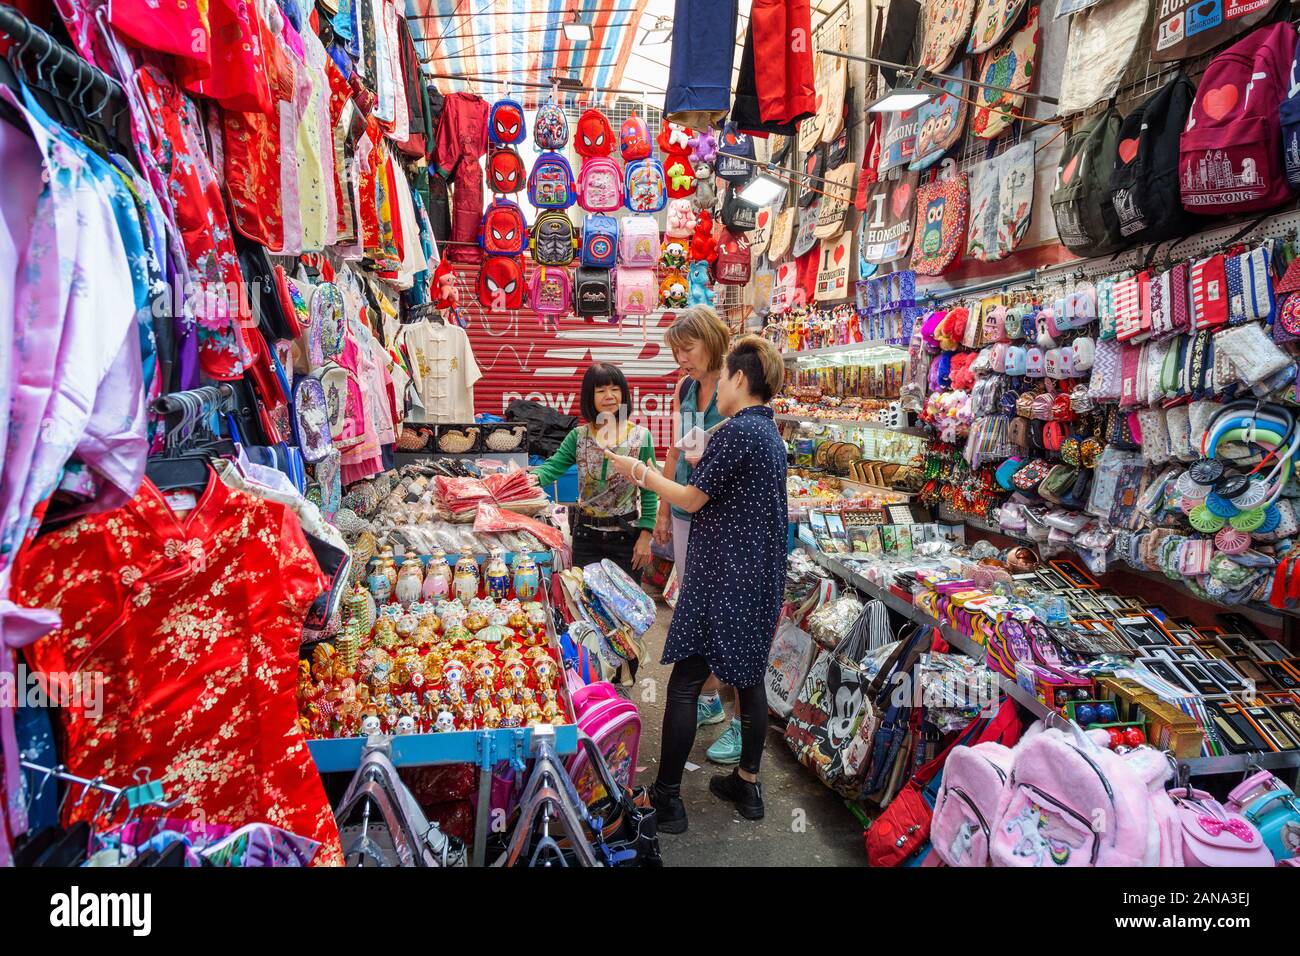 Kowloon Hong Kong market; a woman tourist buying clothes in a market stall, Kowloon, Hong Kong Asia Stock Photo